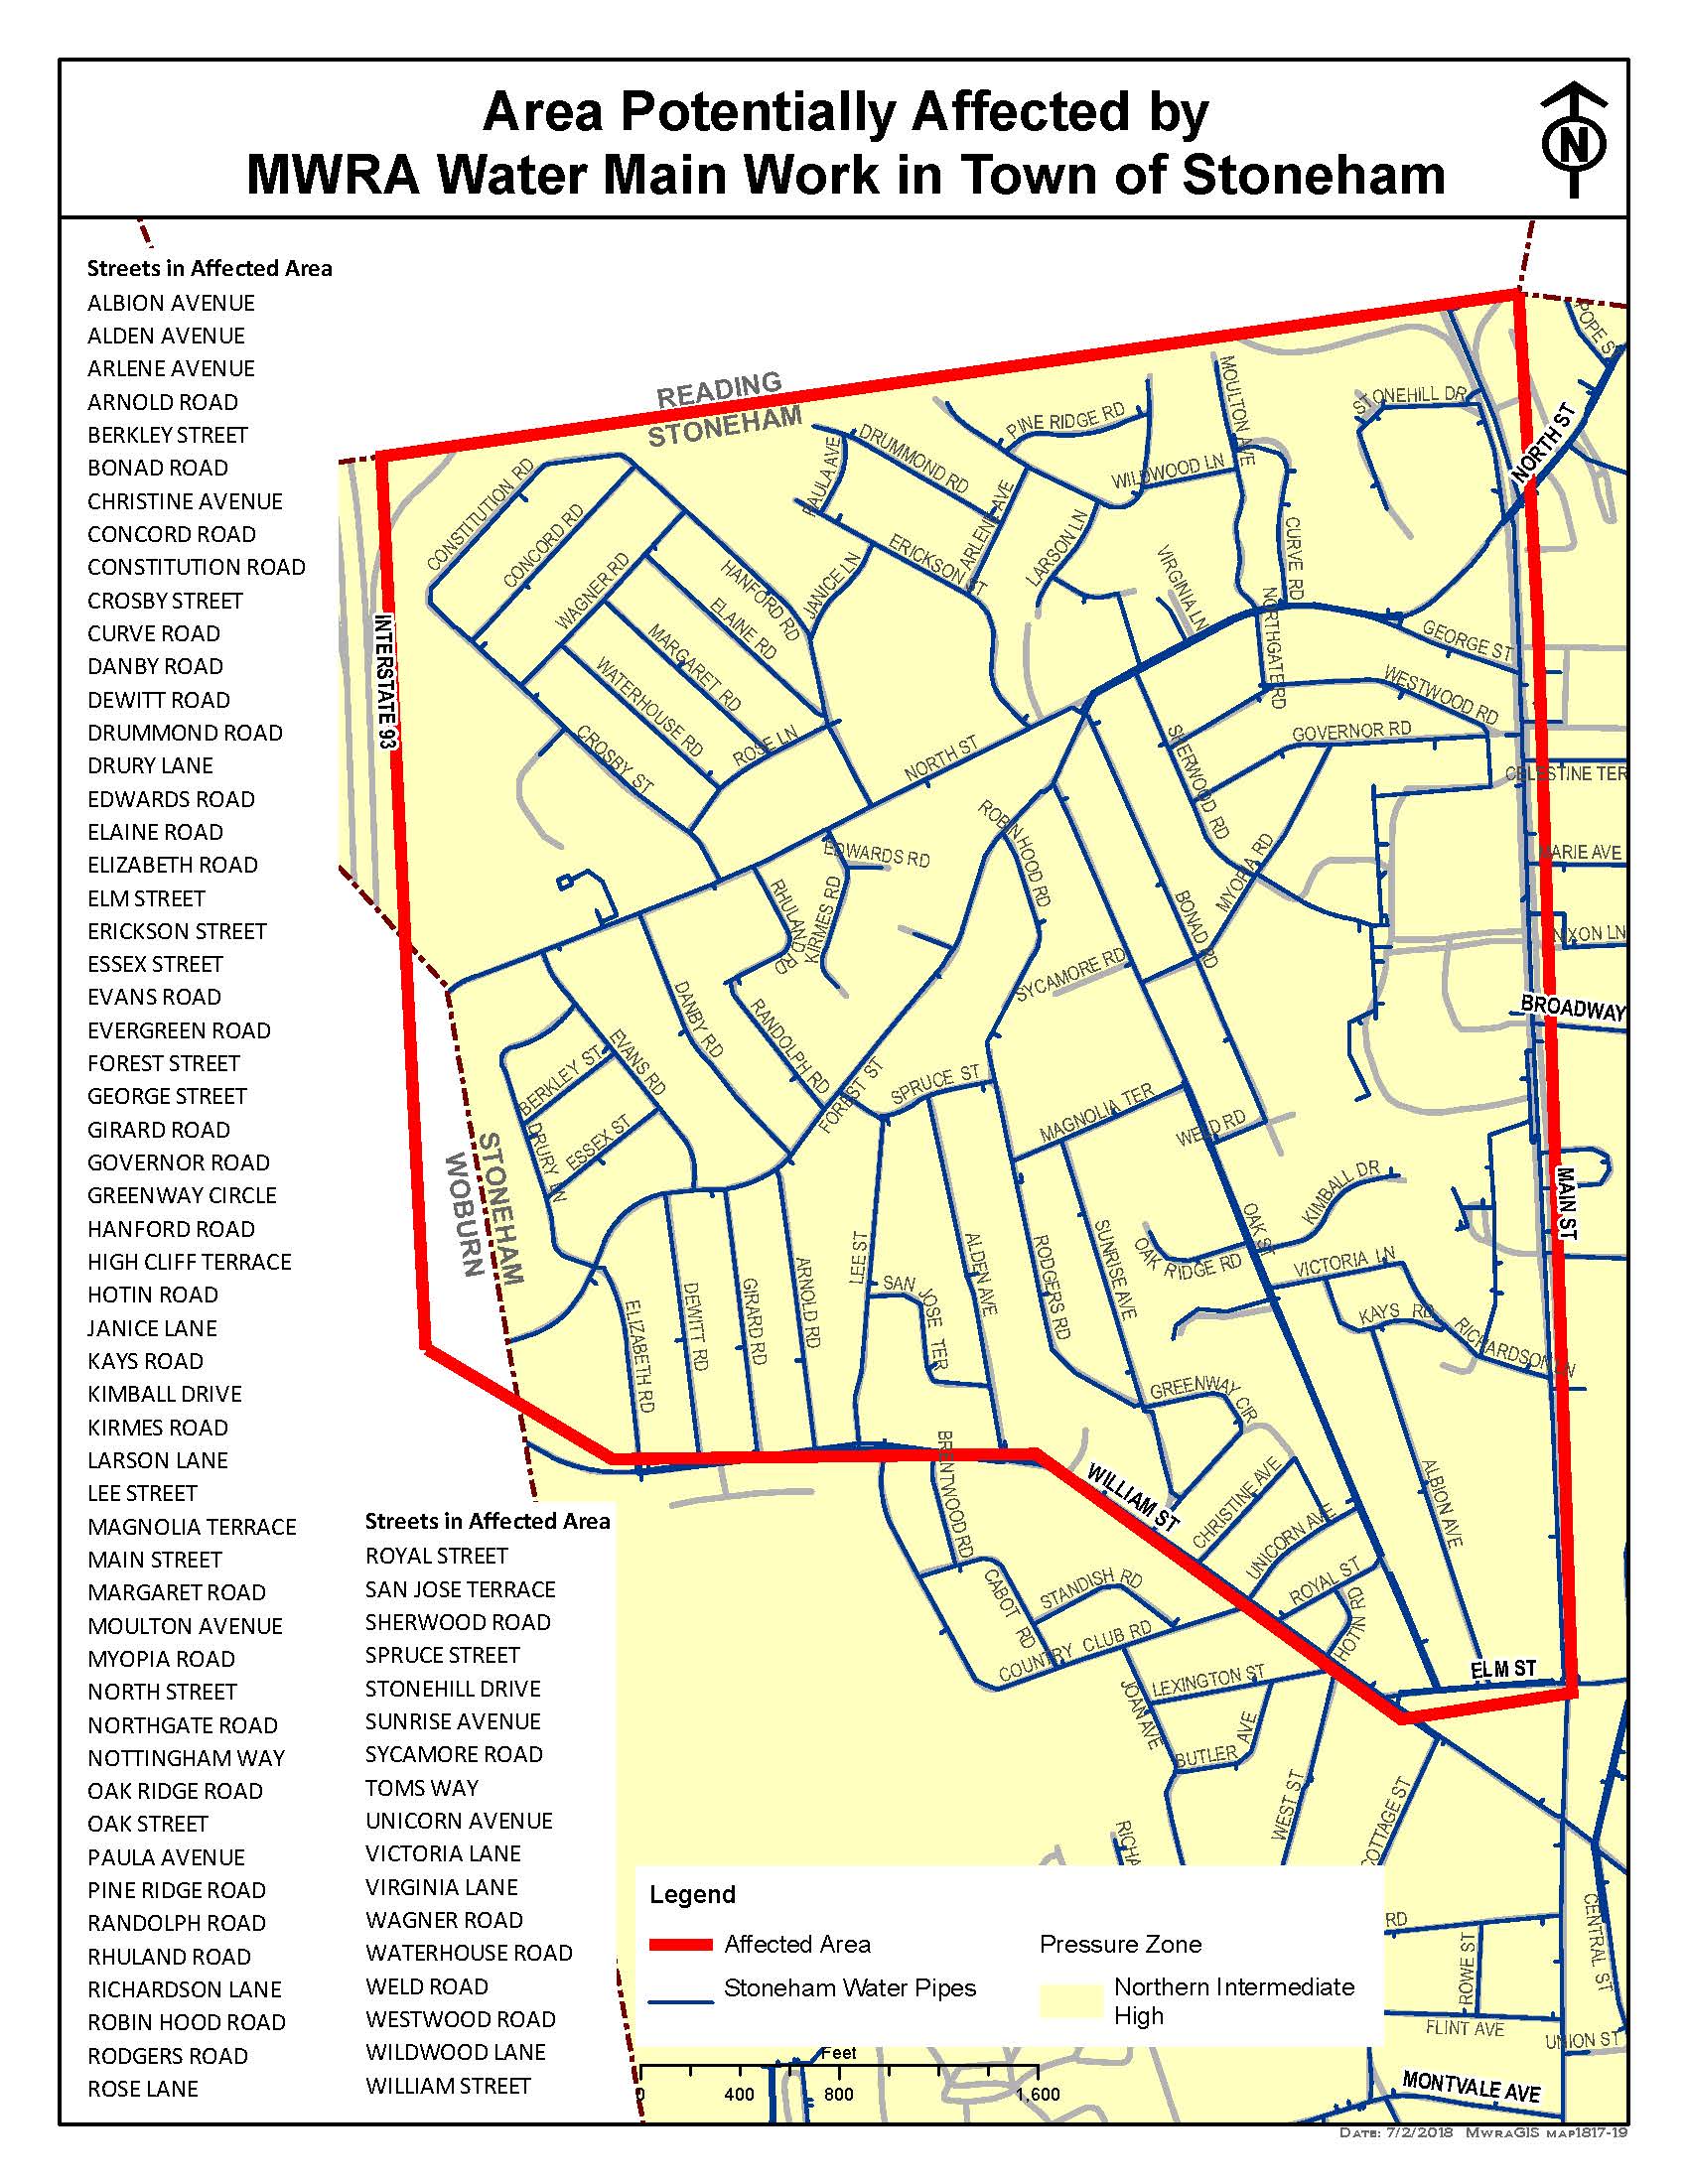 map of area stoneham